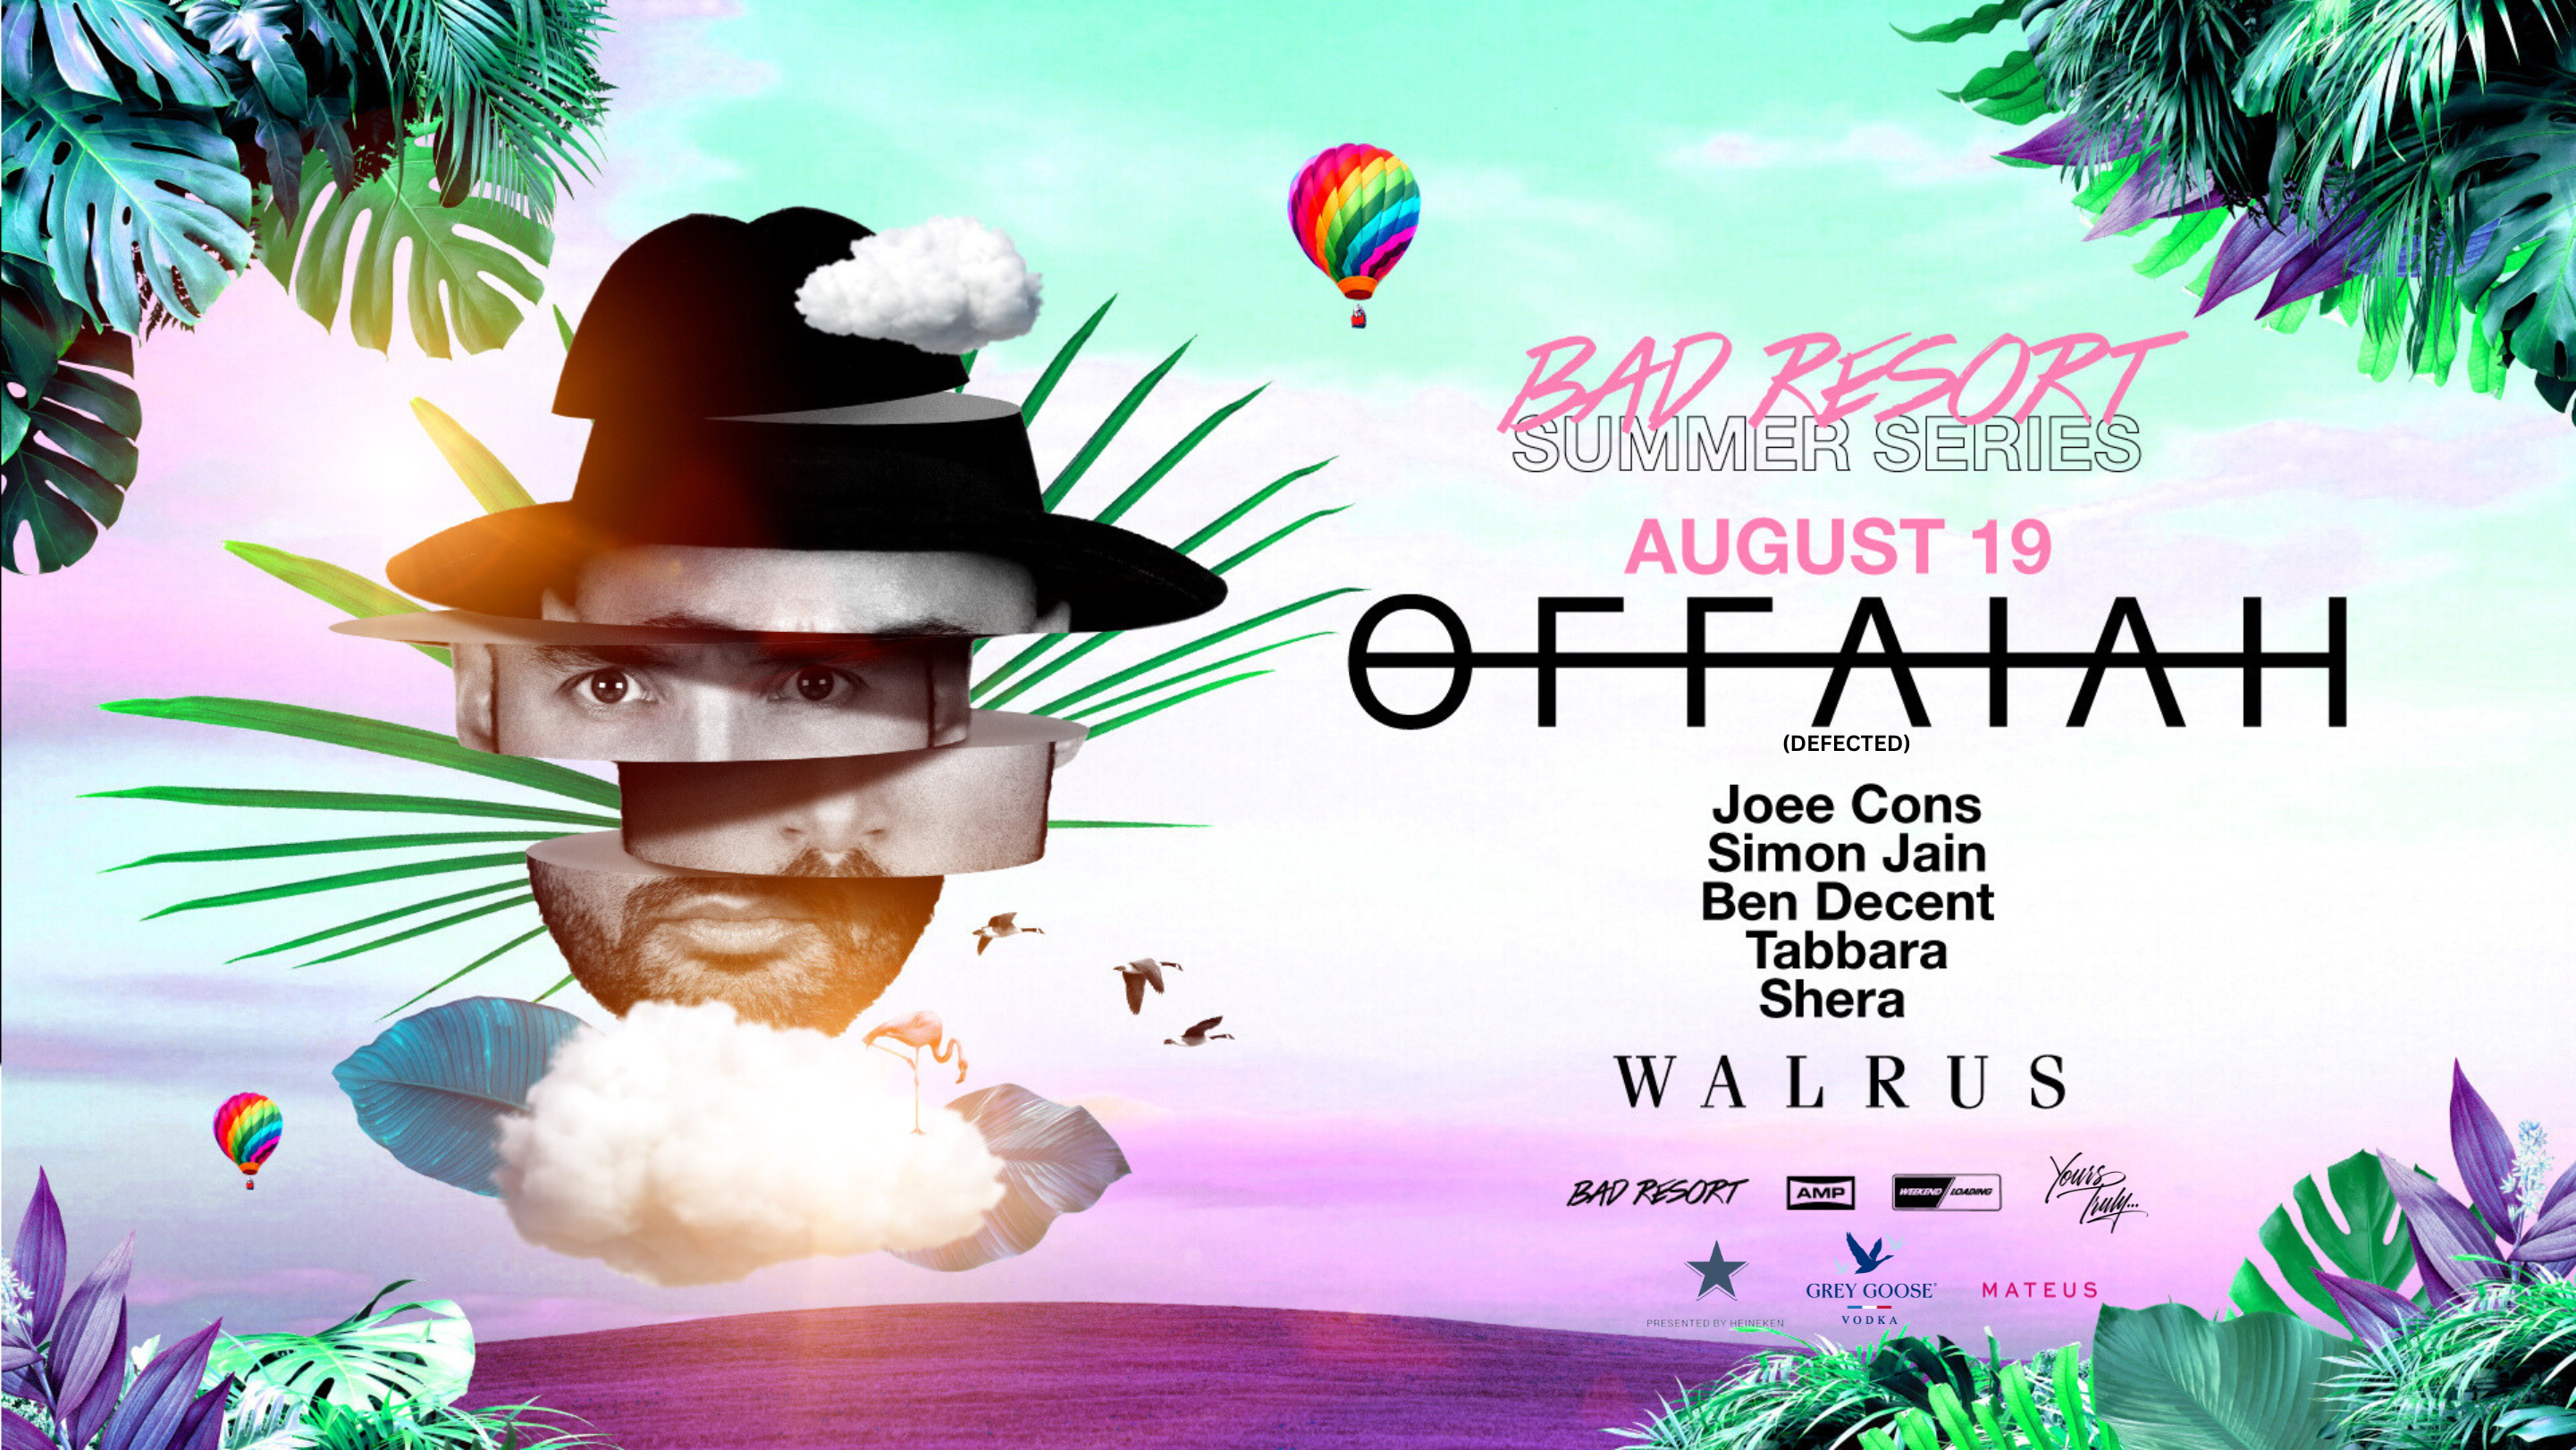 Bad Resort Summer Series presents OFFAIAH - Página frontal